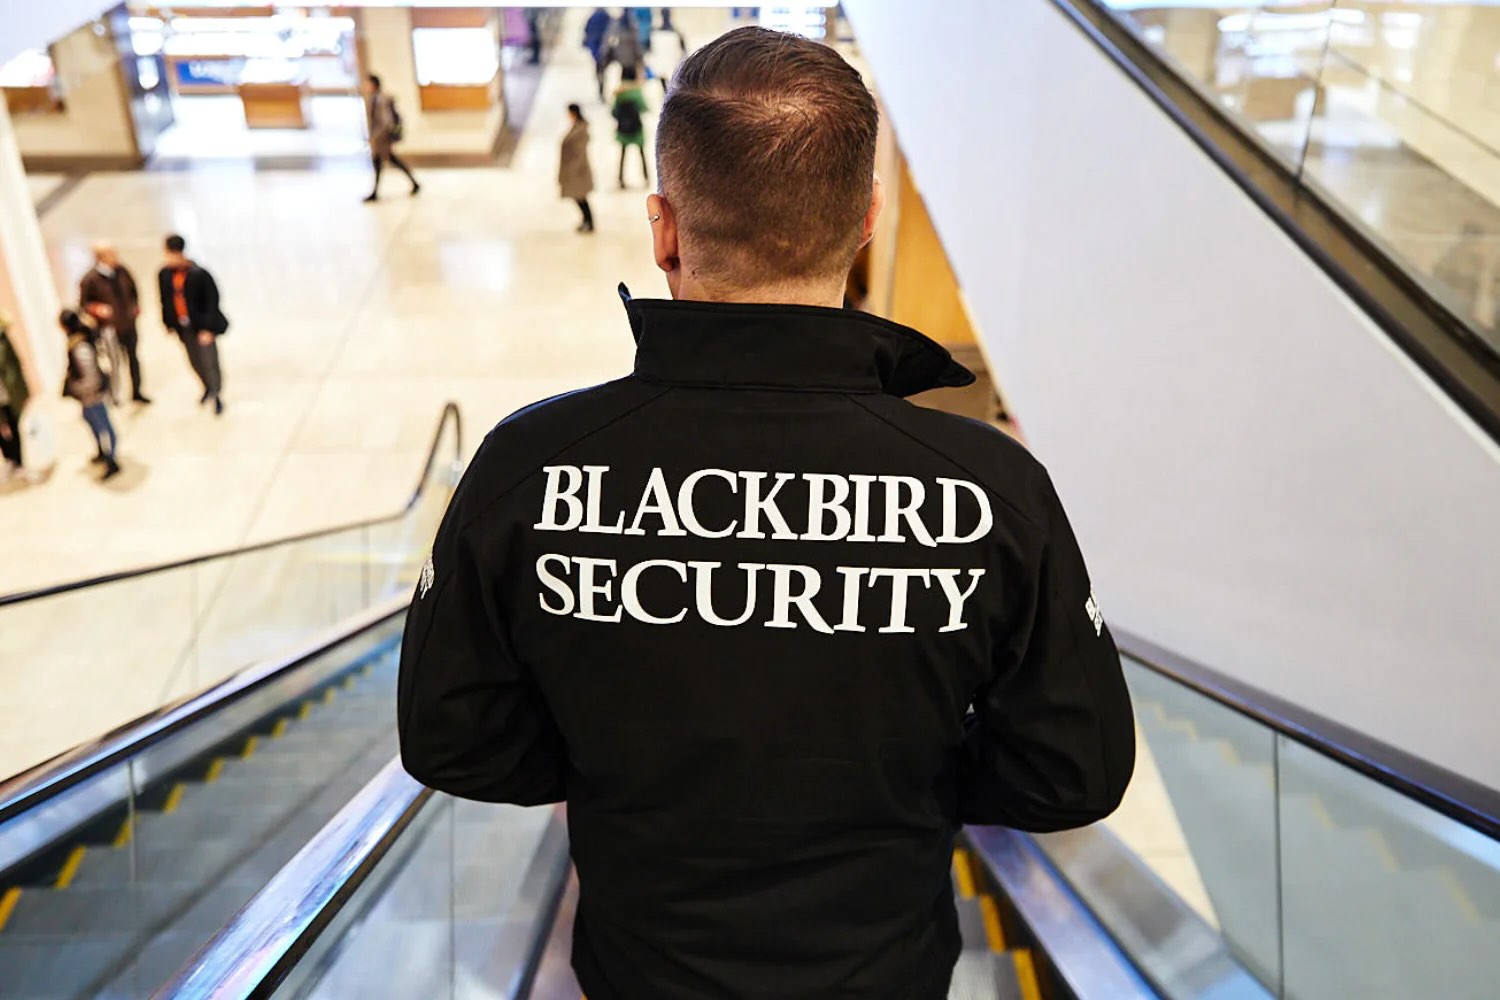 Security guard wearing Blackbird Security uniform